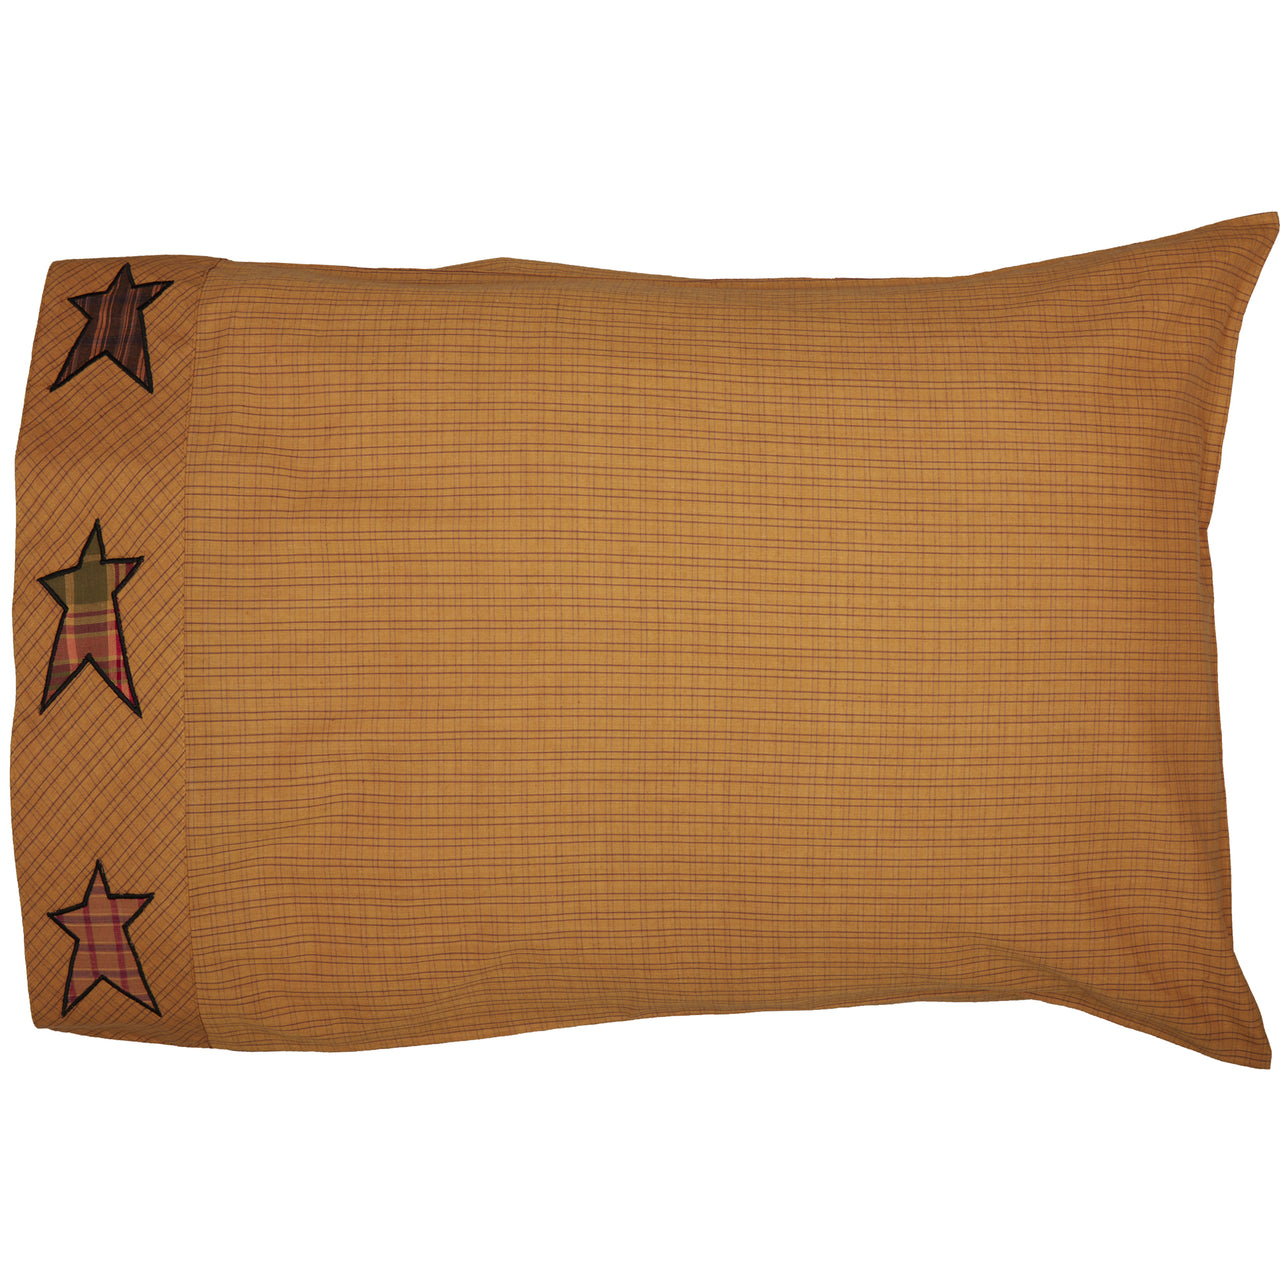 Stratton Standard Pillow Case w/Applique Star Set of 2 21x30 VHC Brands